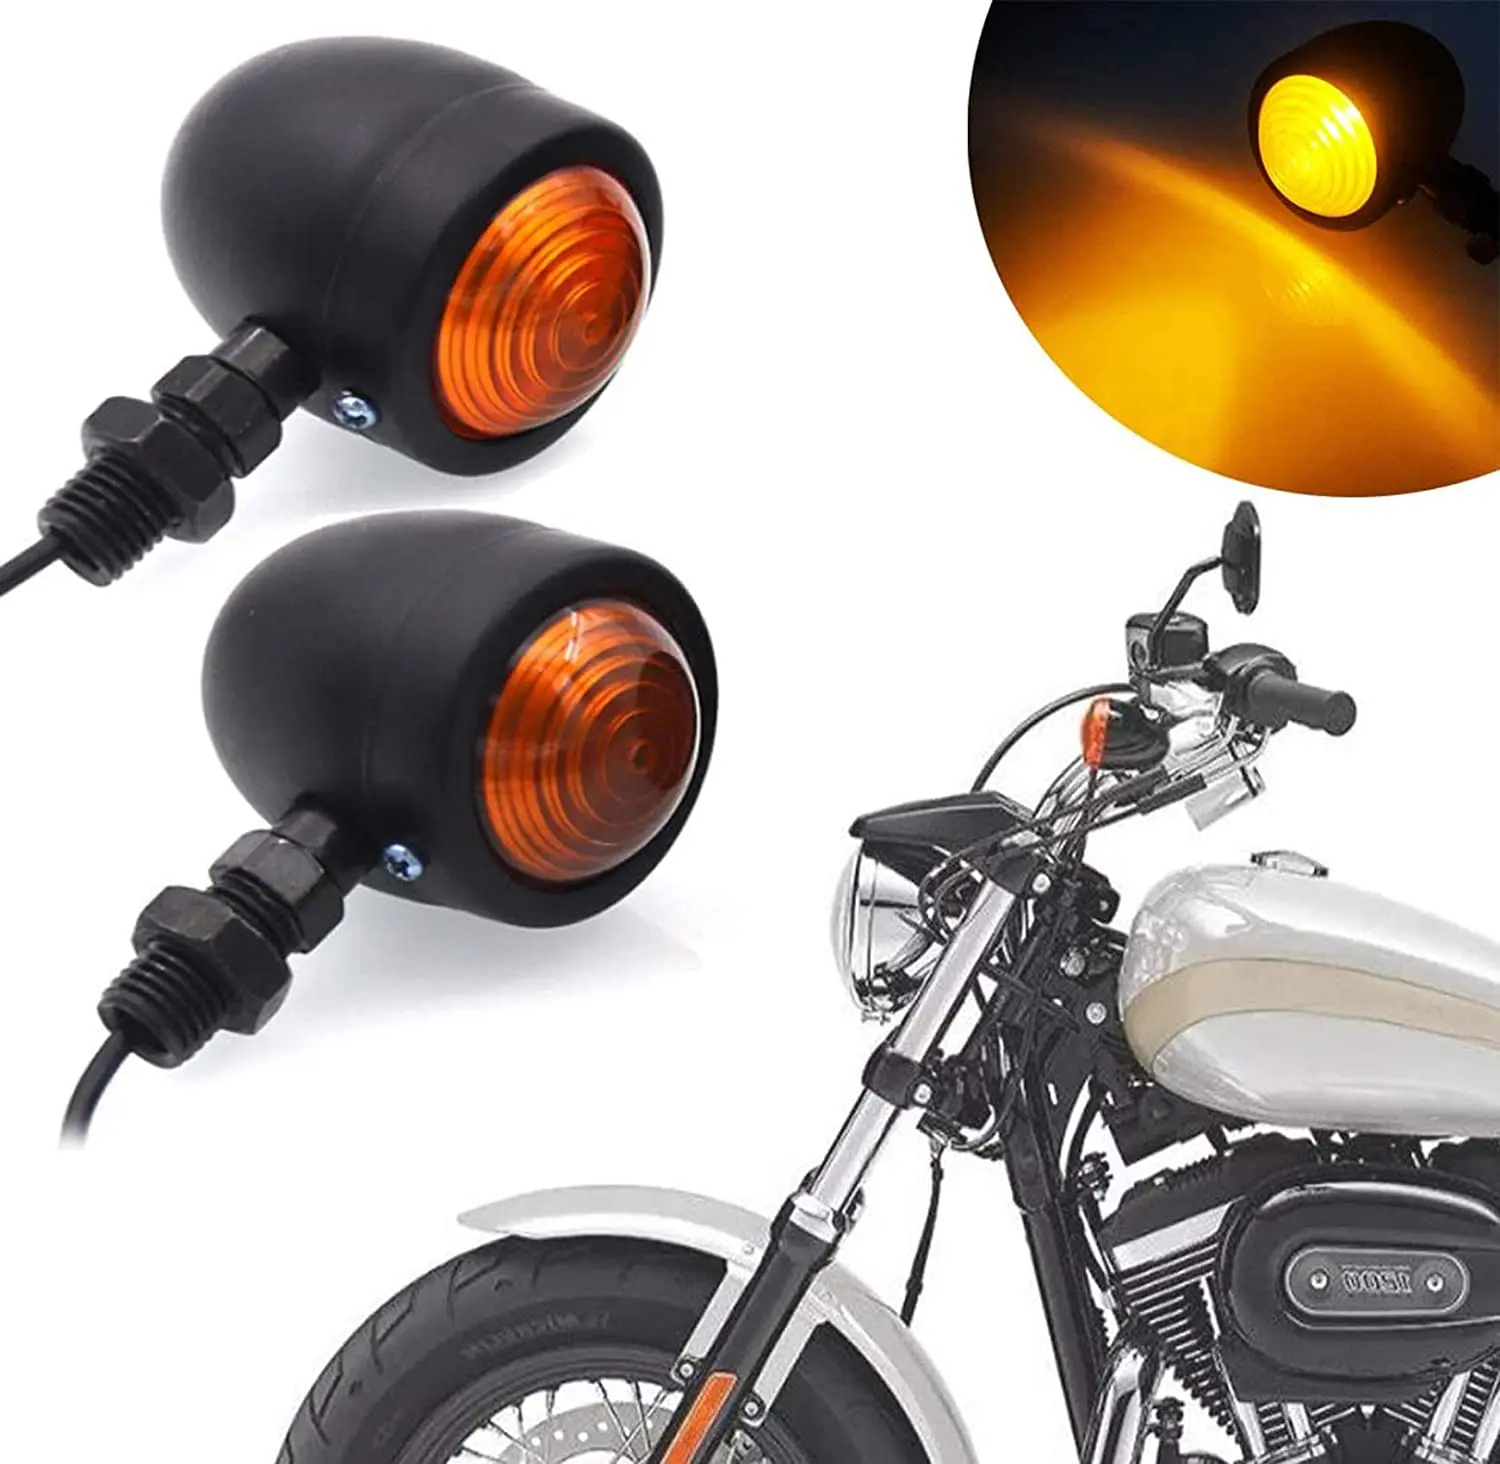 OXMART Motorcycle Turn Signals Universal LED Turn Signal Light Bulbs Fit for Honda Suzuki Harley Kawasaki Dukati Cruiser Bobber Chopper 2pcs 